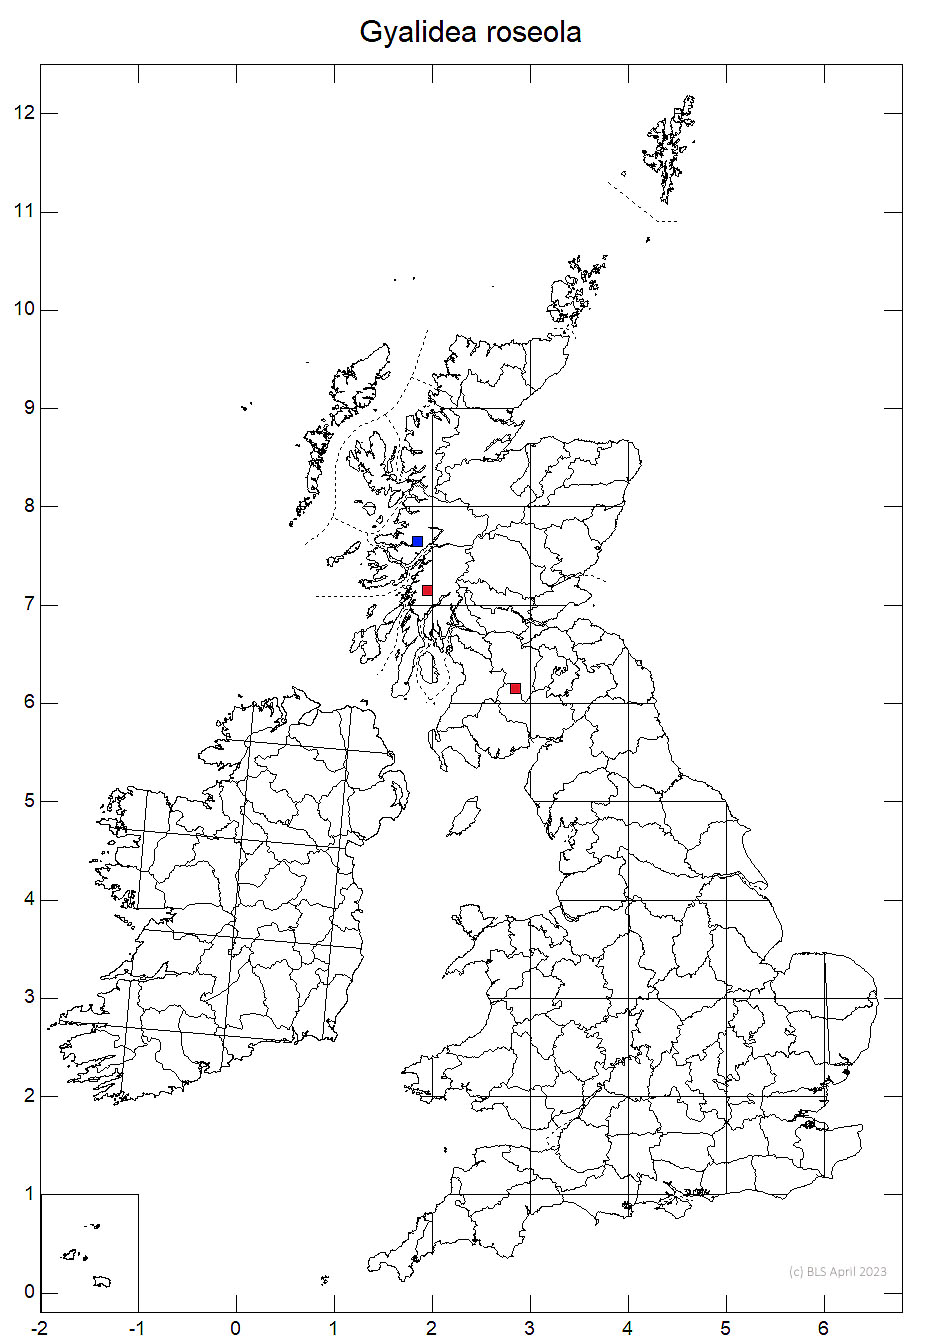 Gyalidea roseola 10km sq distribution map